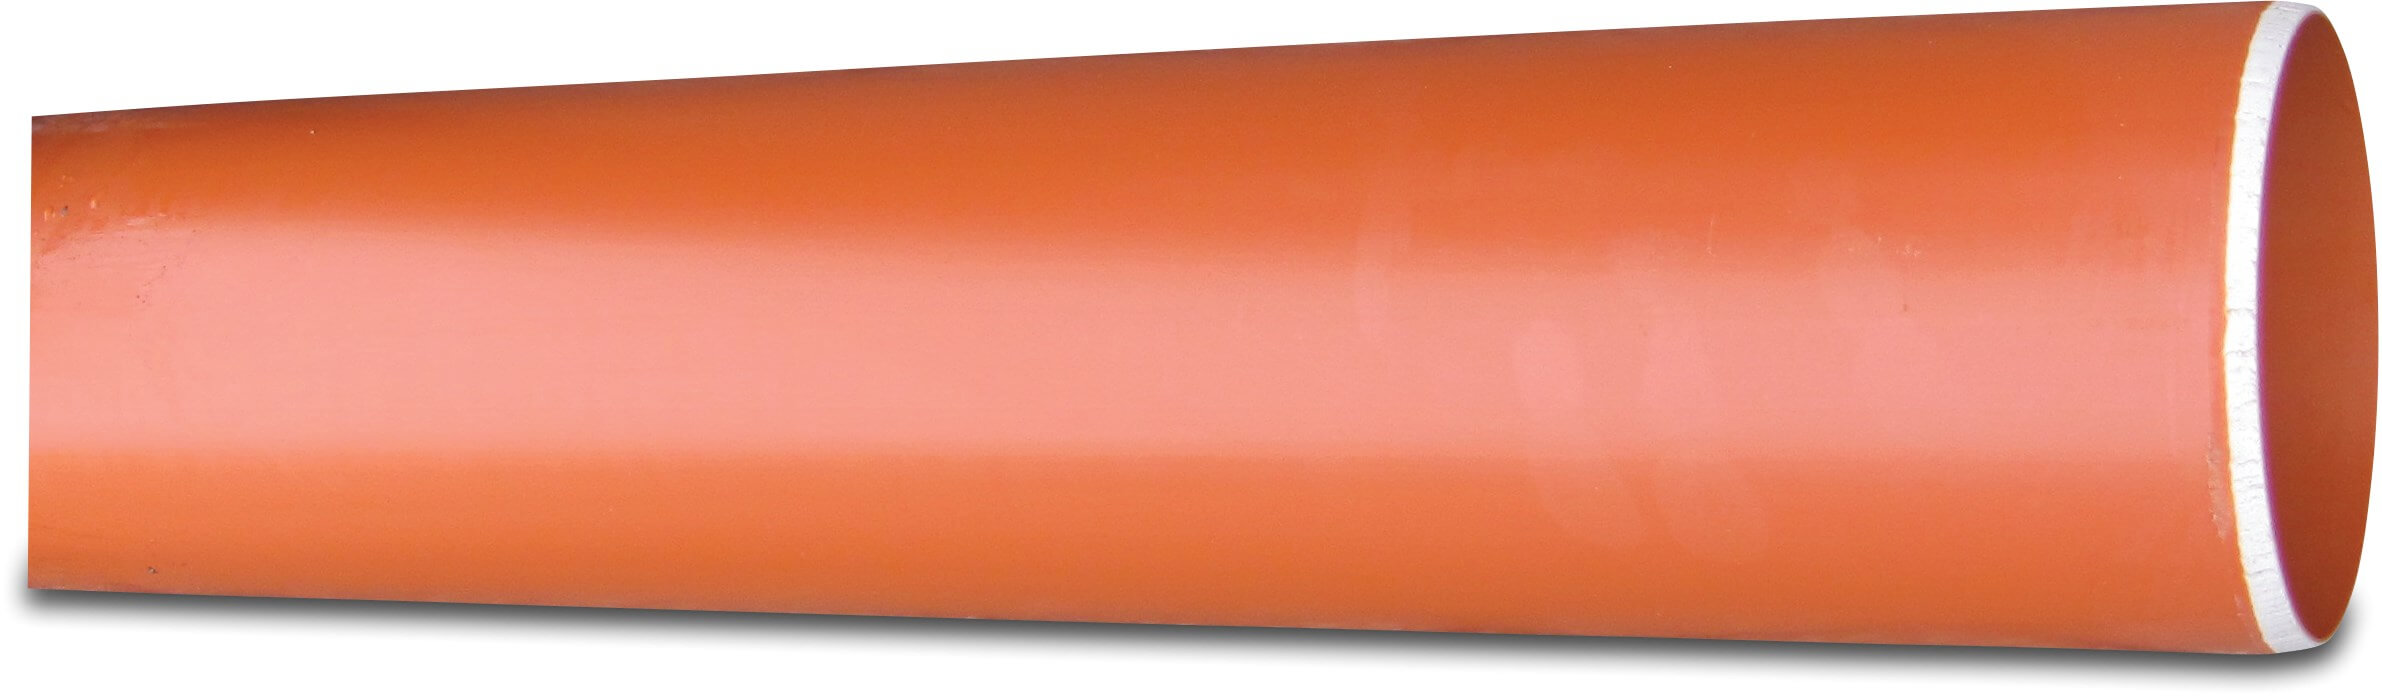 Afvoerbuis PVC-U 110 mm x 3,2 mm SN4 glad roodbruin 5m KOMO/BENOR